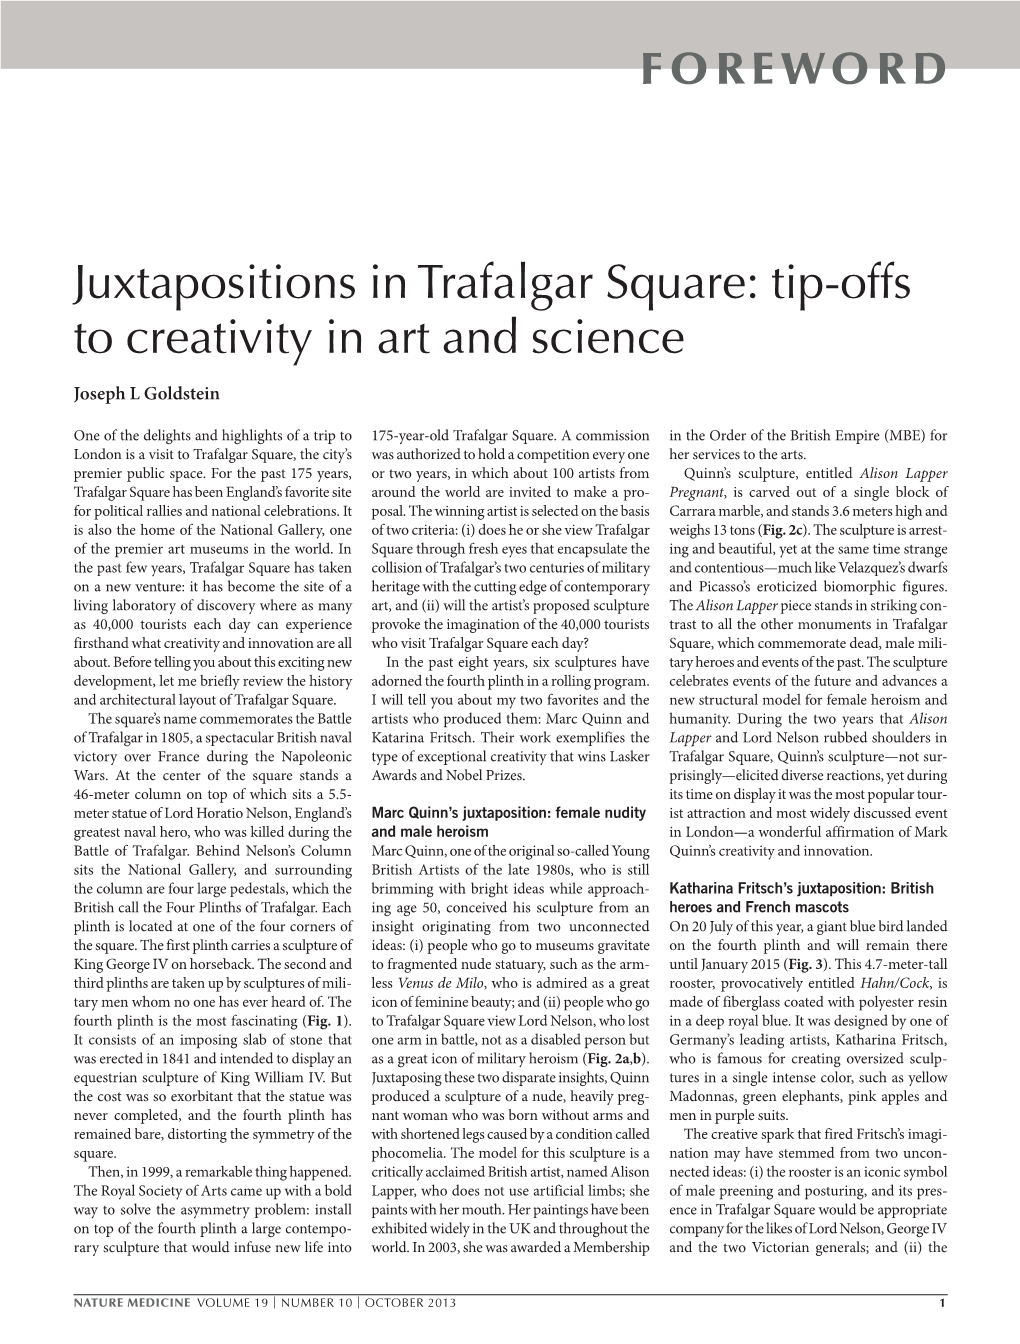 2013: Juxtapositions in Trafalgar Square: Tip-Offs to Creativity in Art